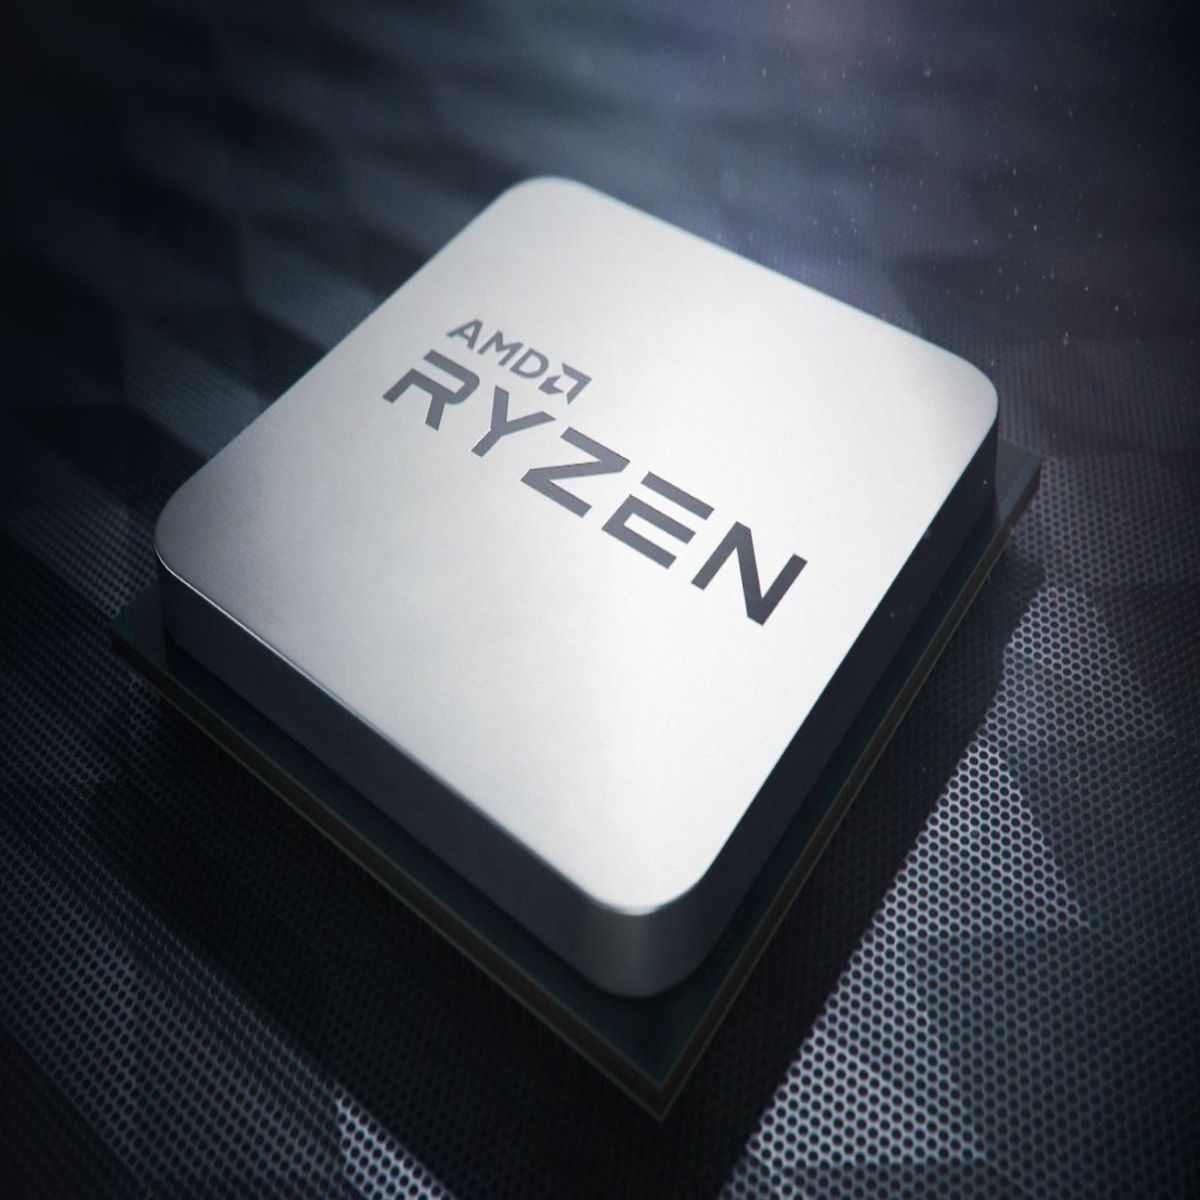 AMD Ryzen release date, price all unveiled Computex 2019 | Rock Paper Shotgun